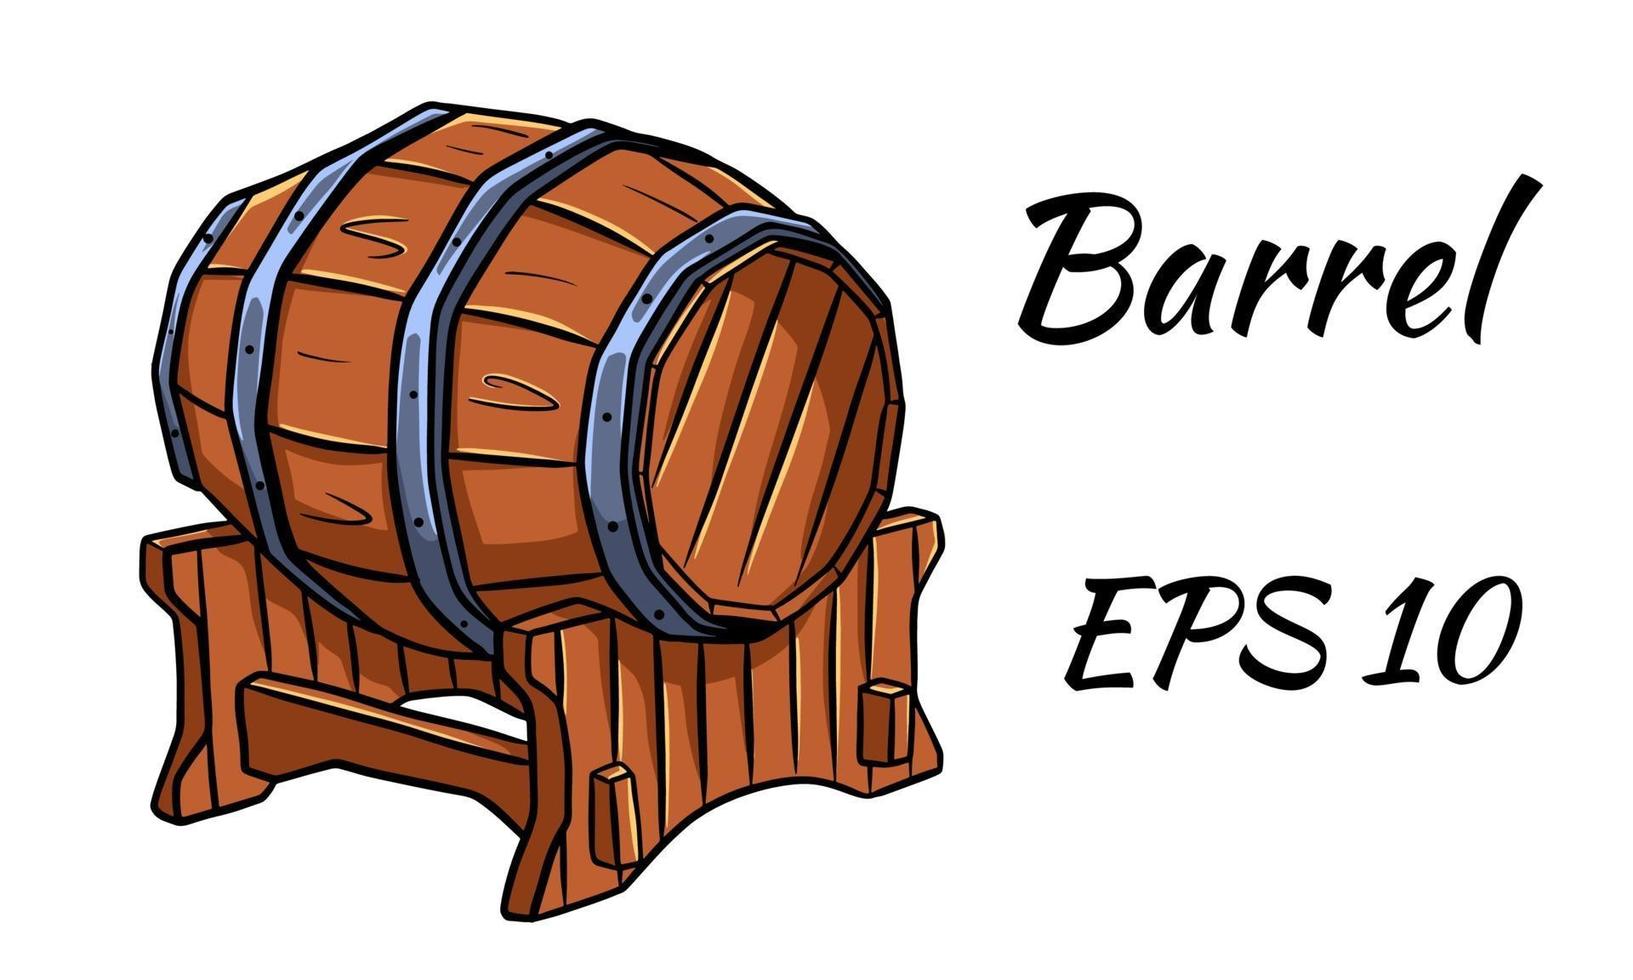 Barrel for wine or beer. vector